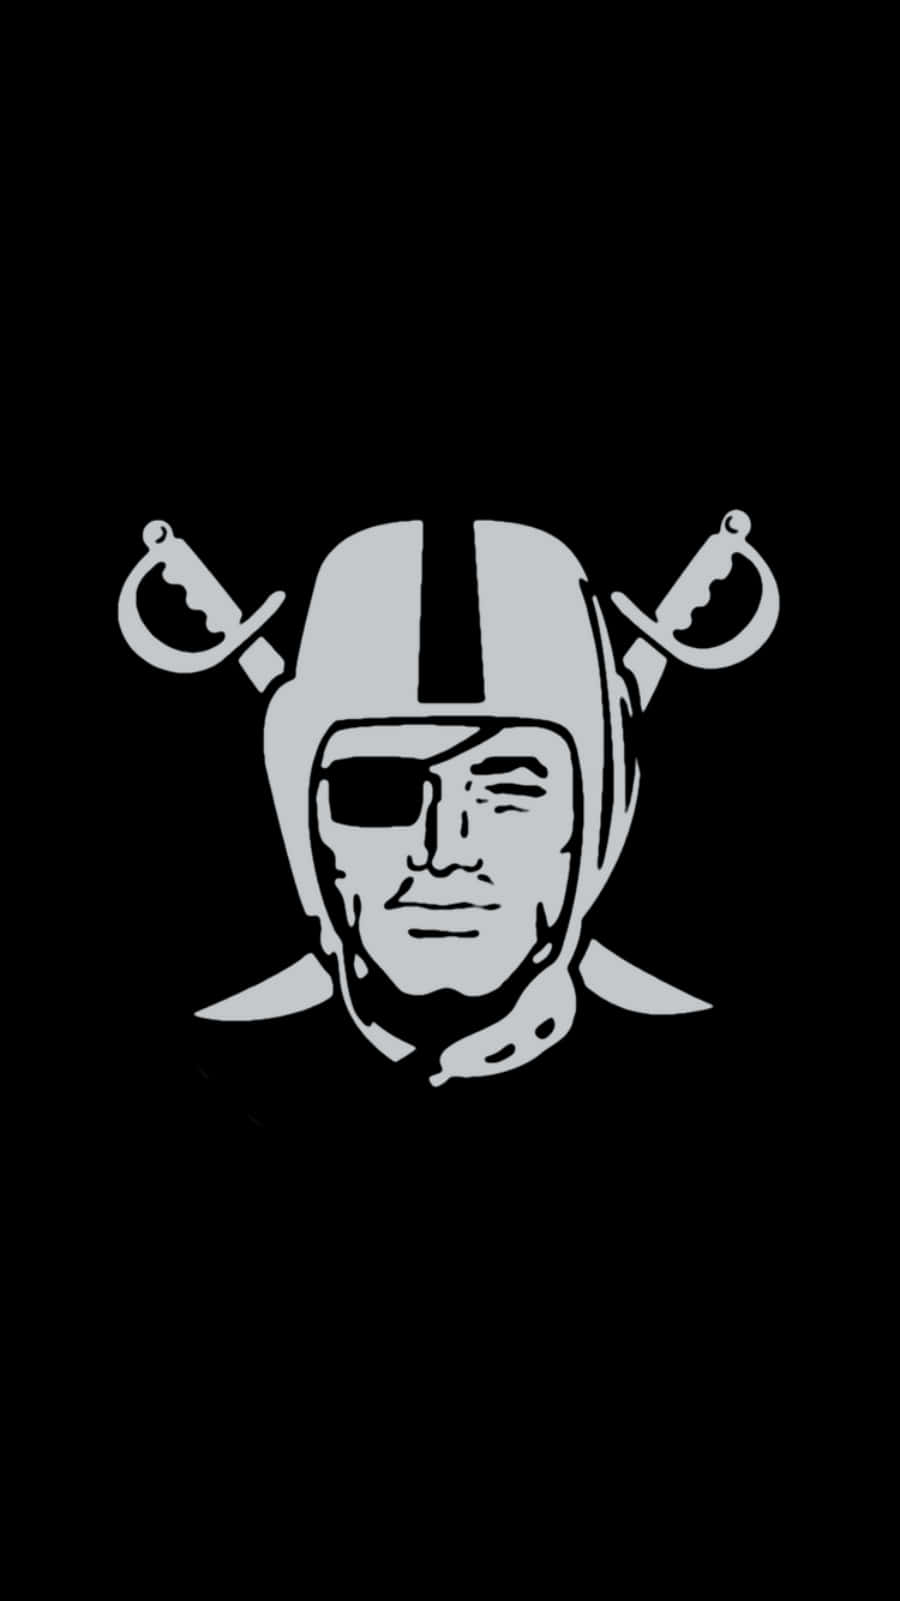 Raiders Logo Pirate Man With Swords Helmet Wallpaper